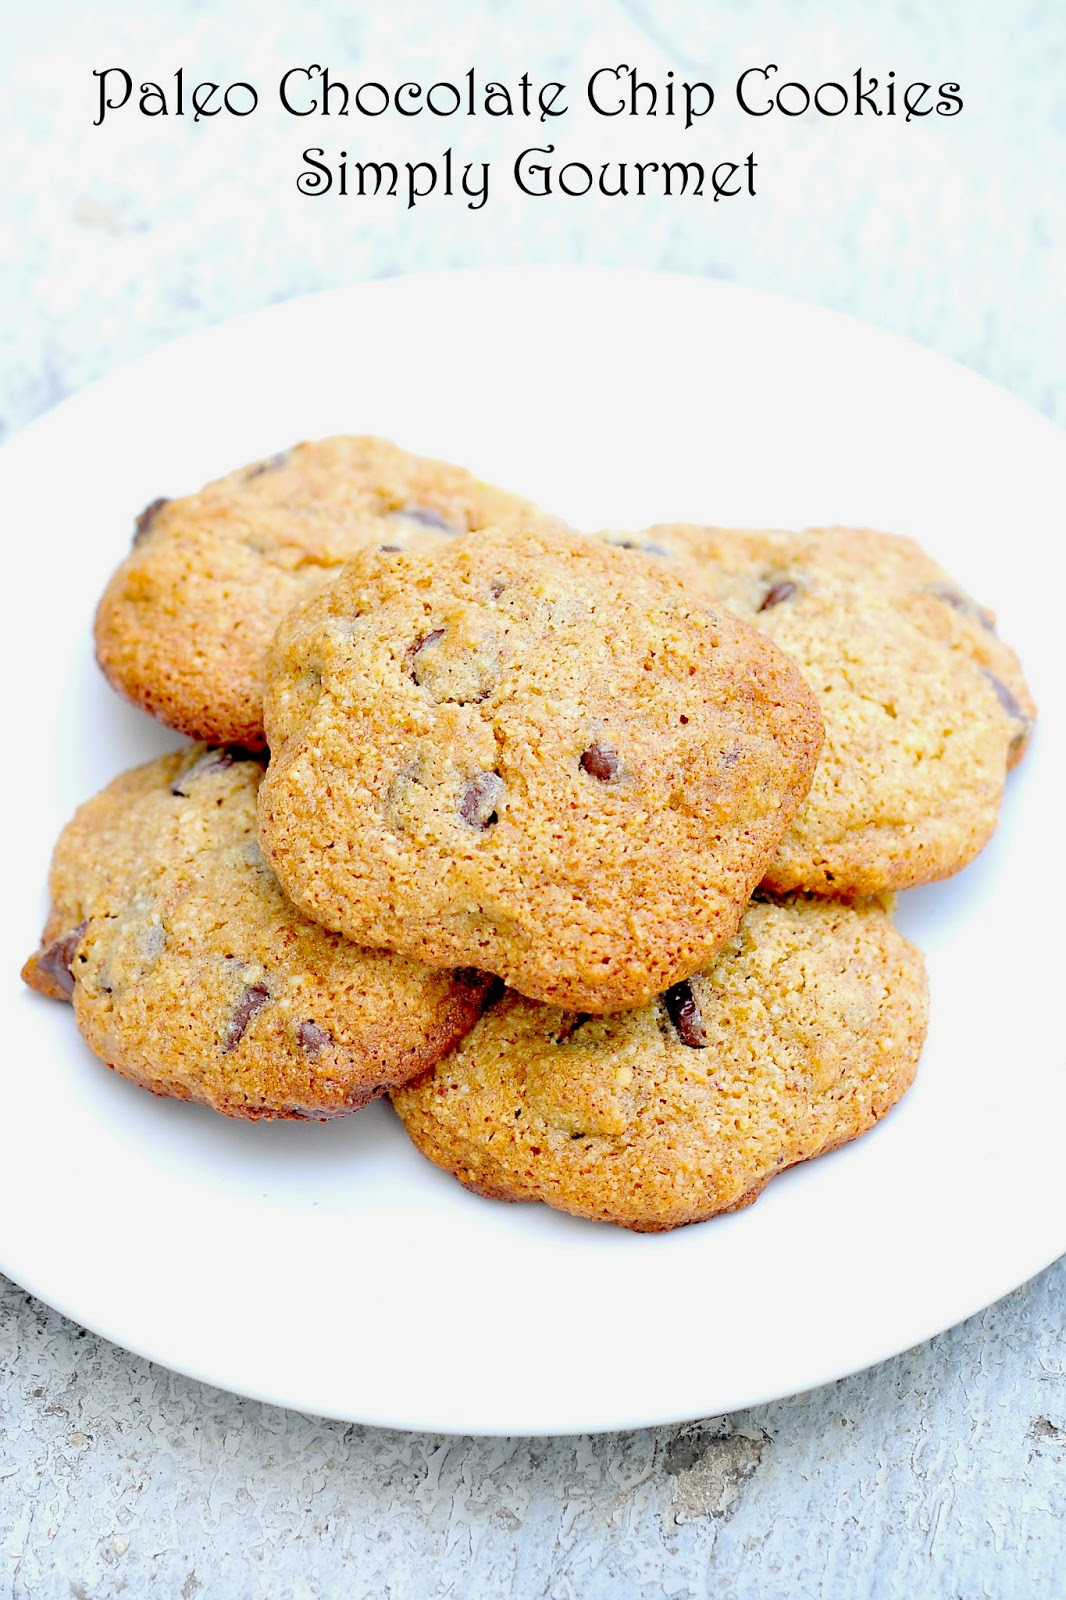 Gourmet Chocolate Chip Cookies Recipe
 Simply Gourmet Chocolate Chip Cookies paleo grainfree